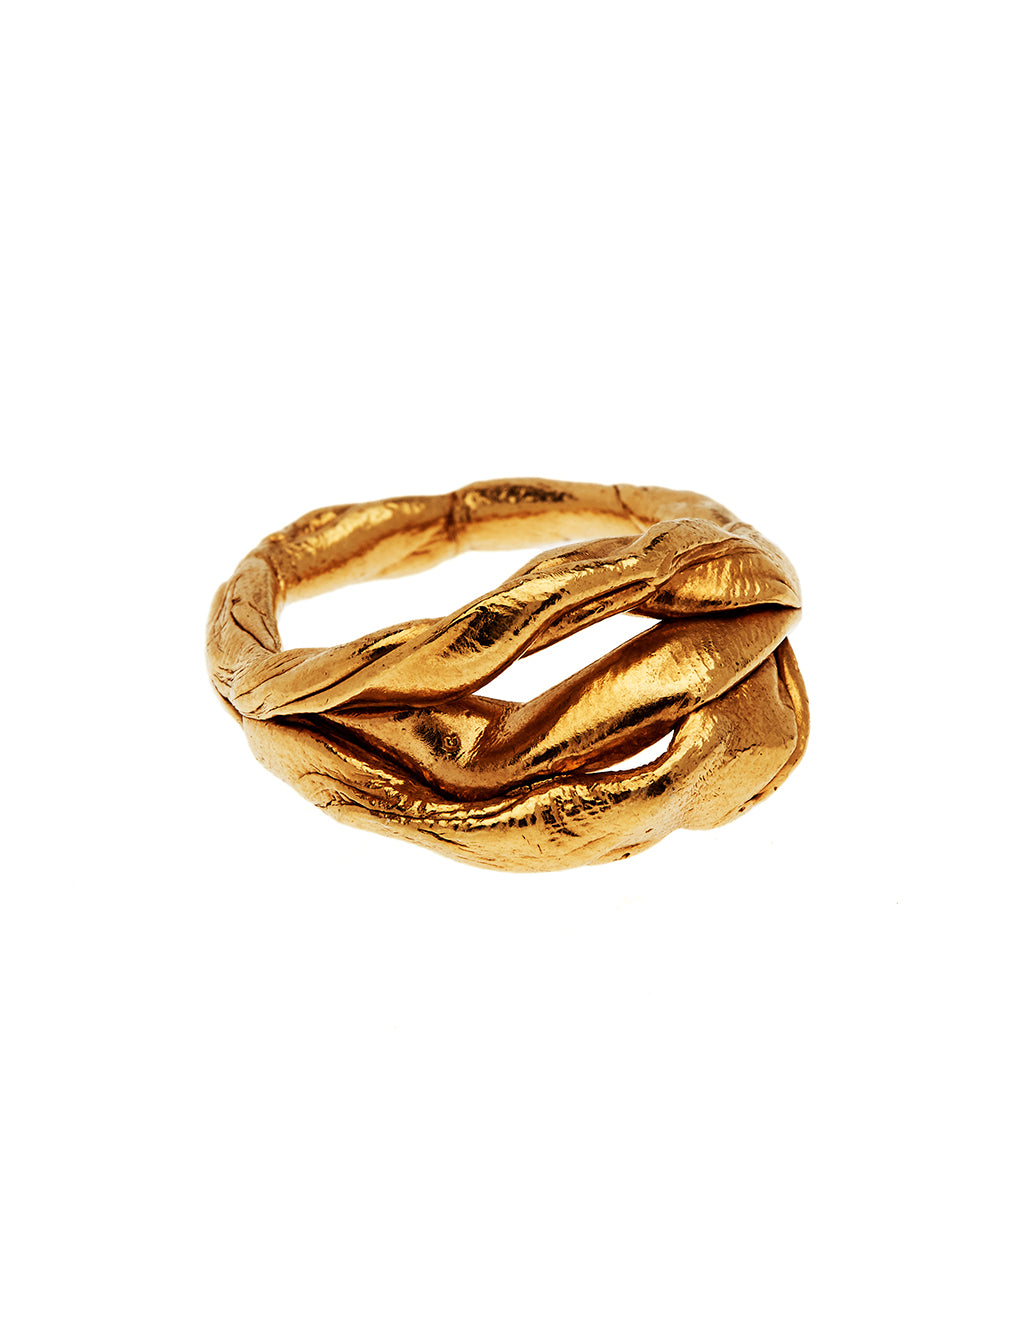 Triskelion inspired jewelry in gold vermeil